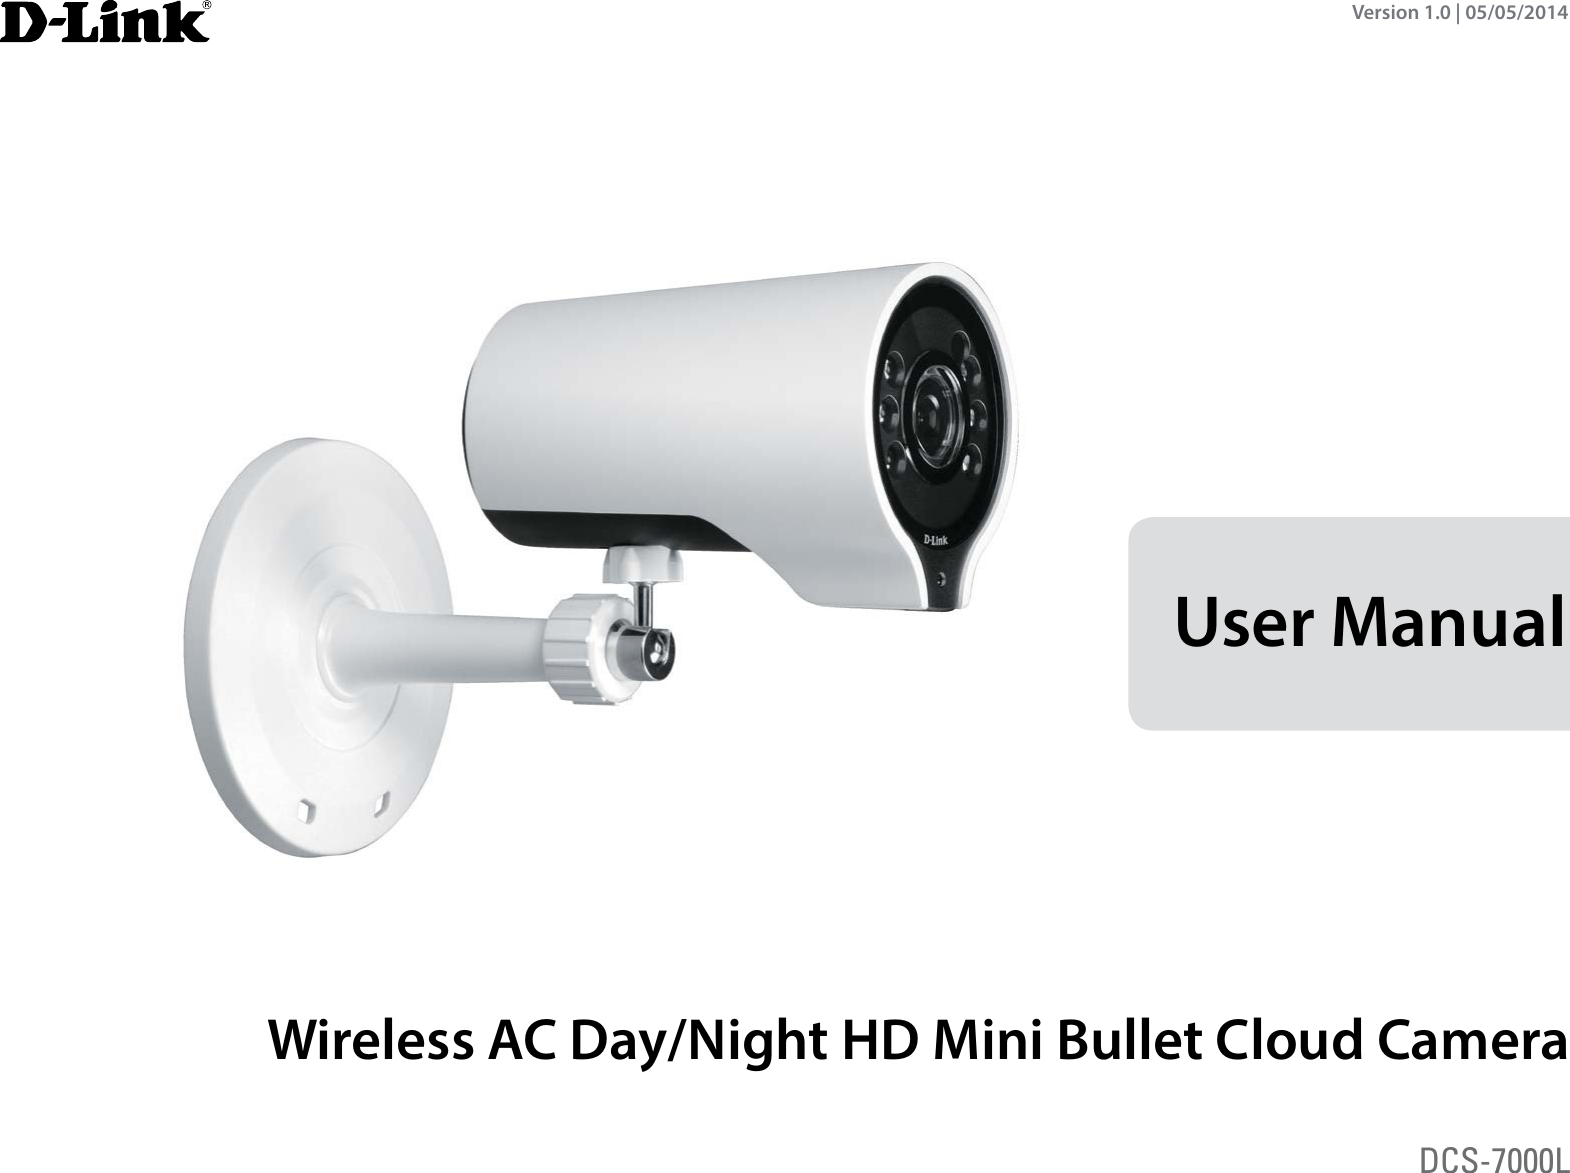 User ManualWireless AC Day/Night HD Mini Bullet Cloud CameraVersion 1.0 | 05/05/2014DCS-7000L